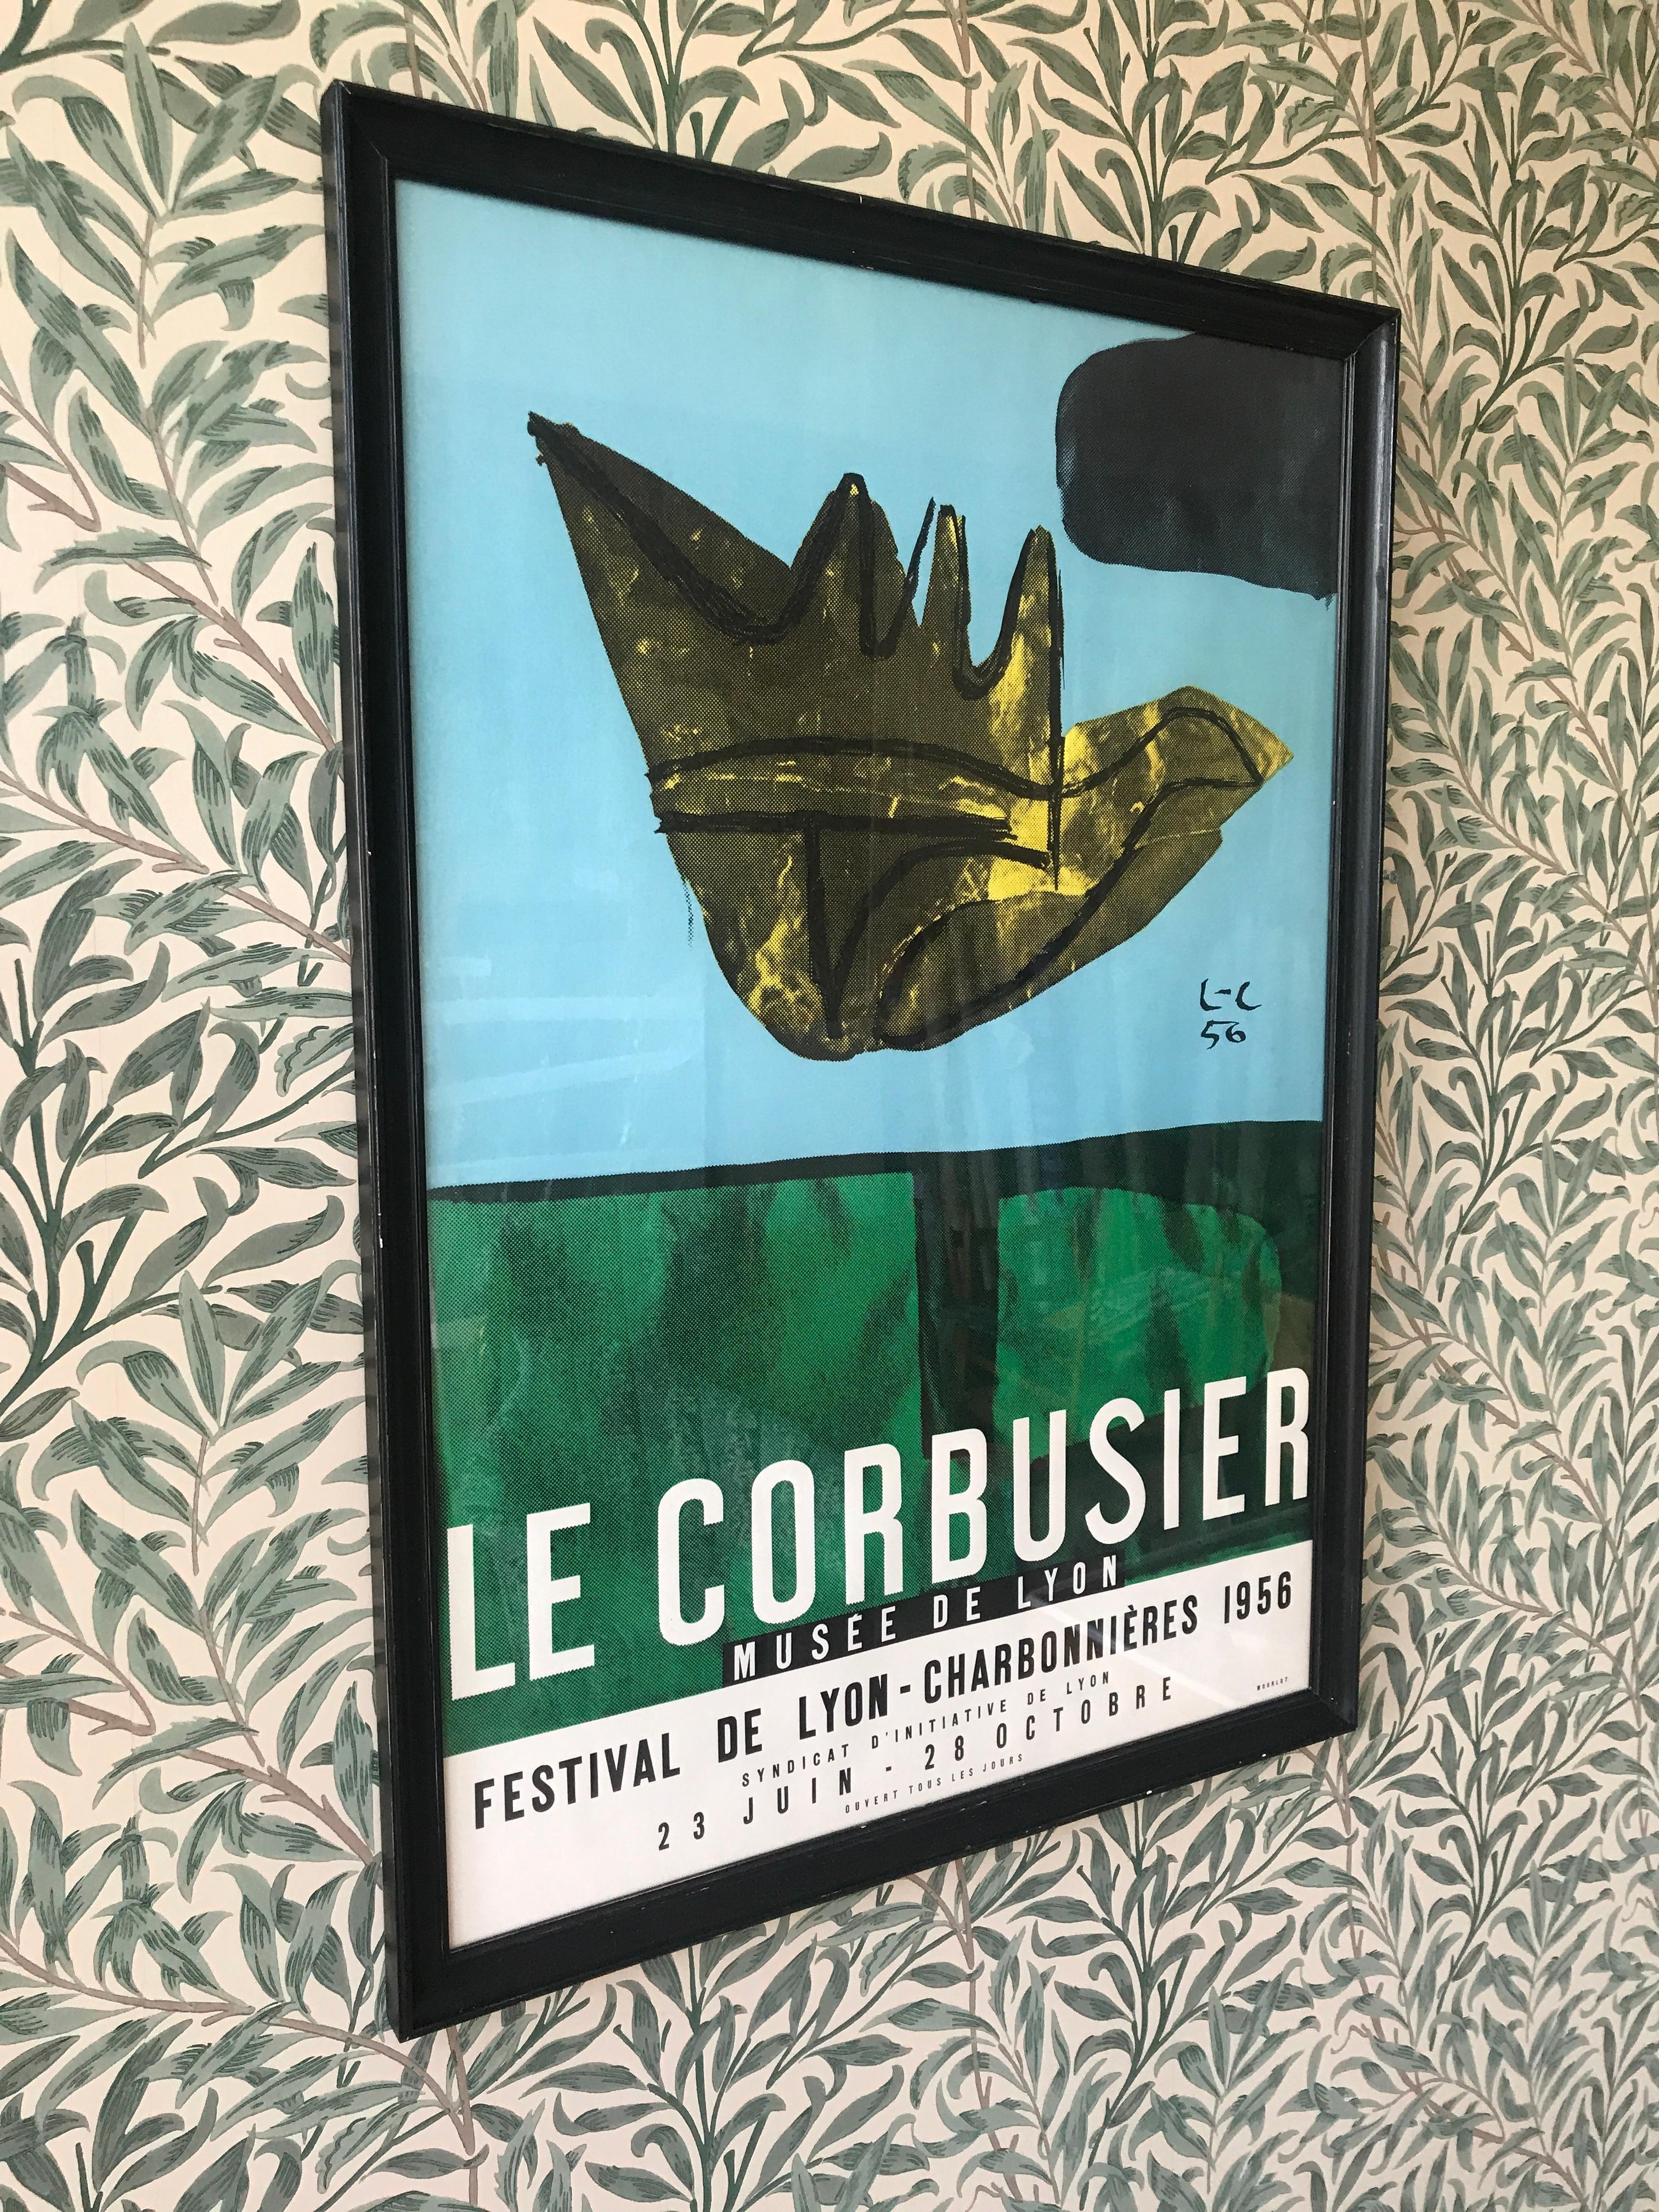 le corbusier exhibition poster